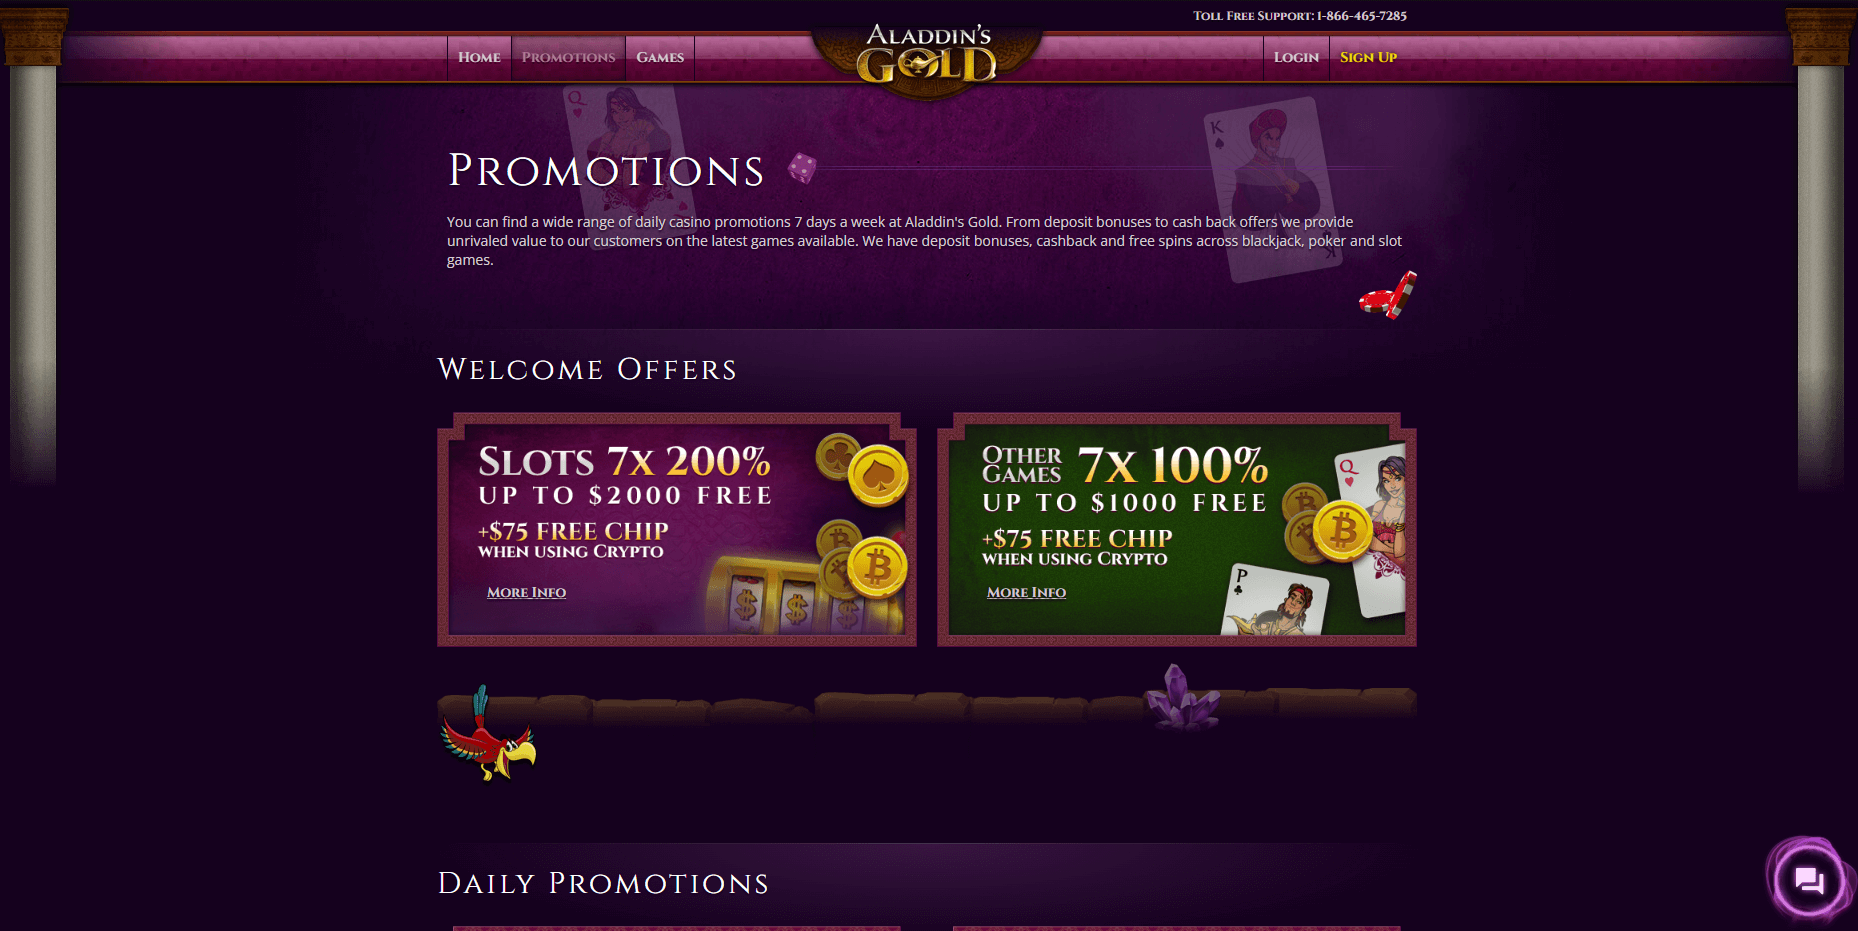 Aladdins Gold Promotions